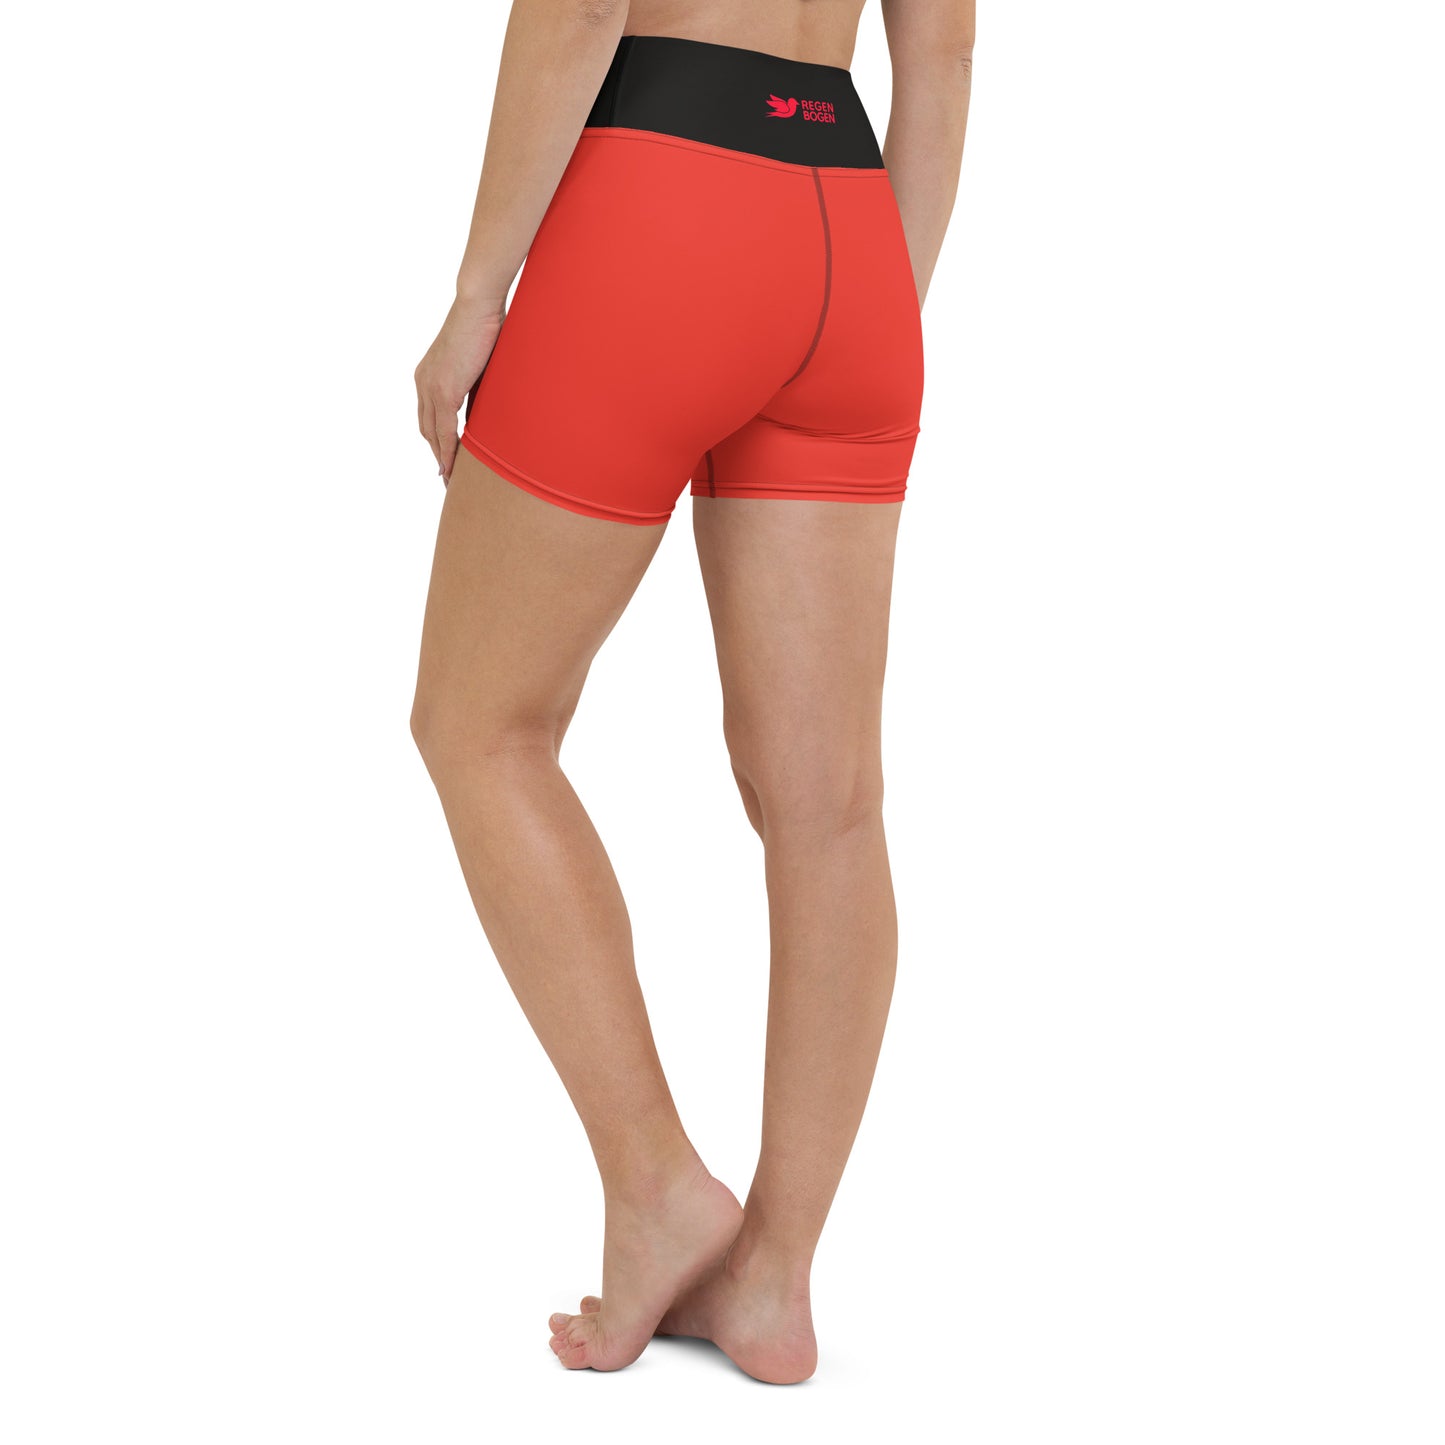 Edelweiss Colorblock High Waist Yoga Shorts / Bike Shorts with Inside Pocket